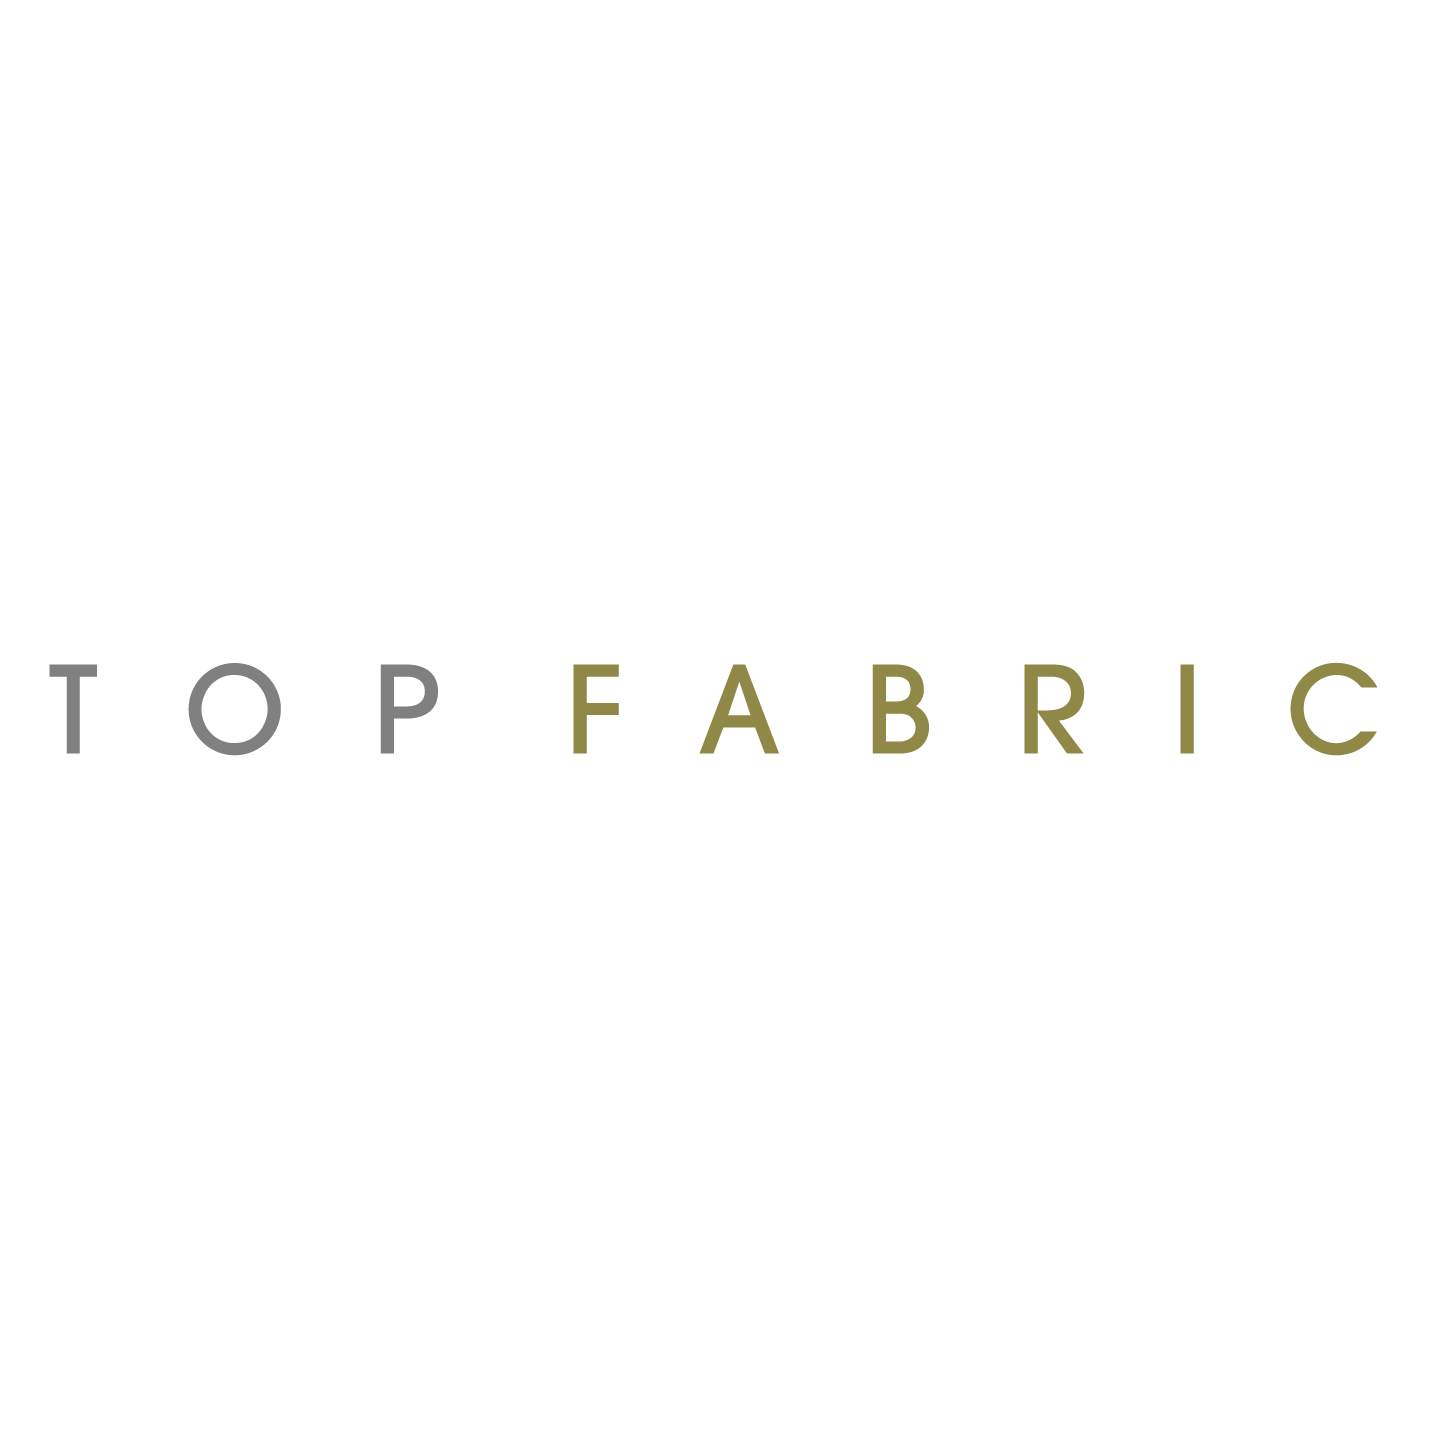 Buy fabric online - Interiors